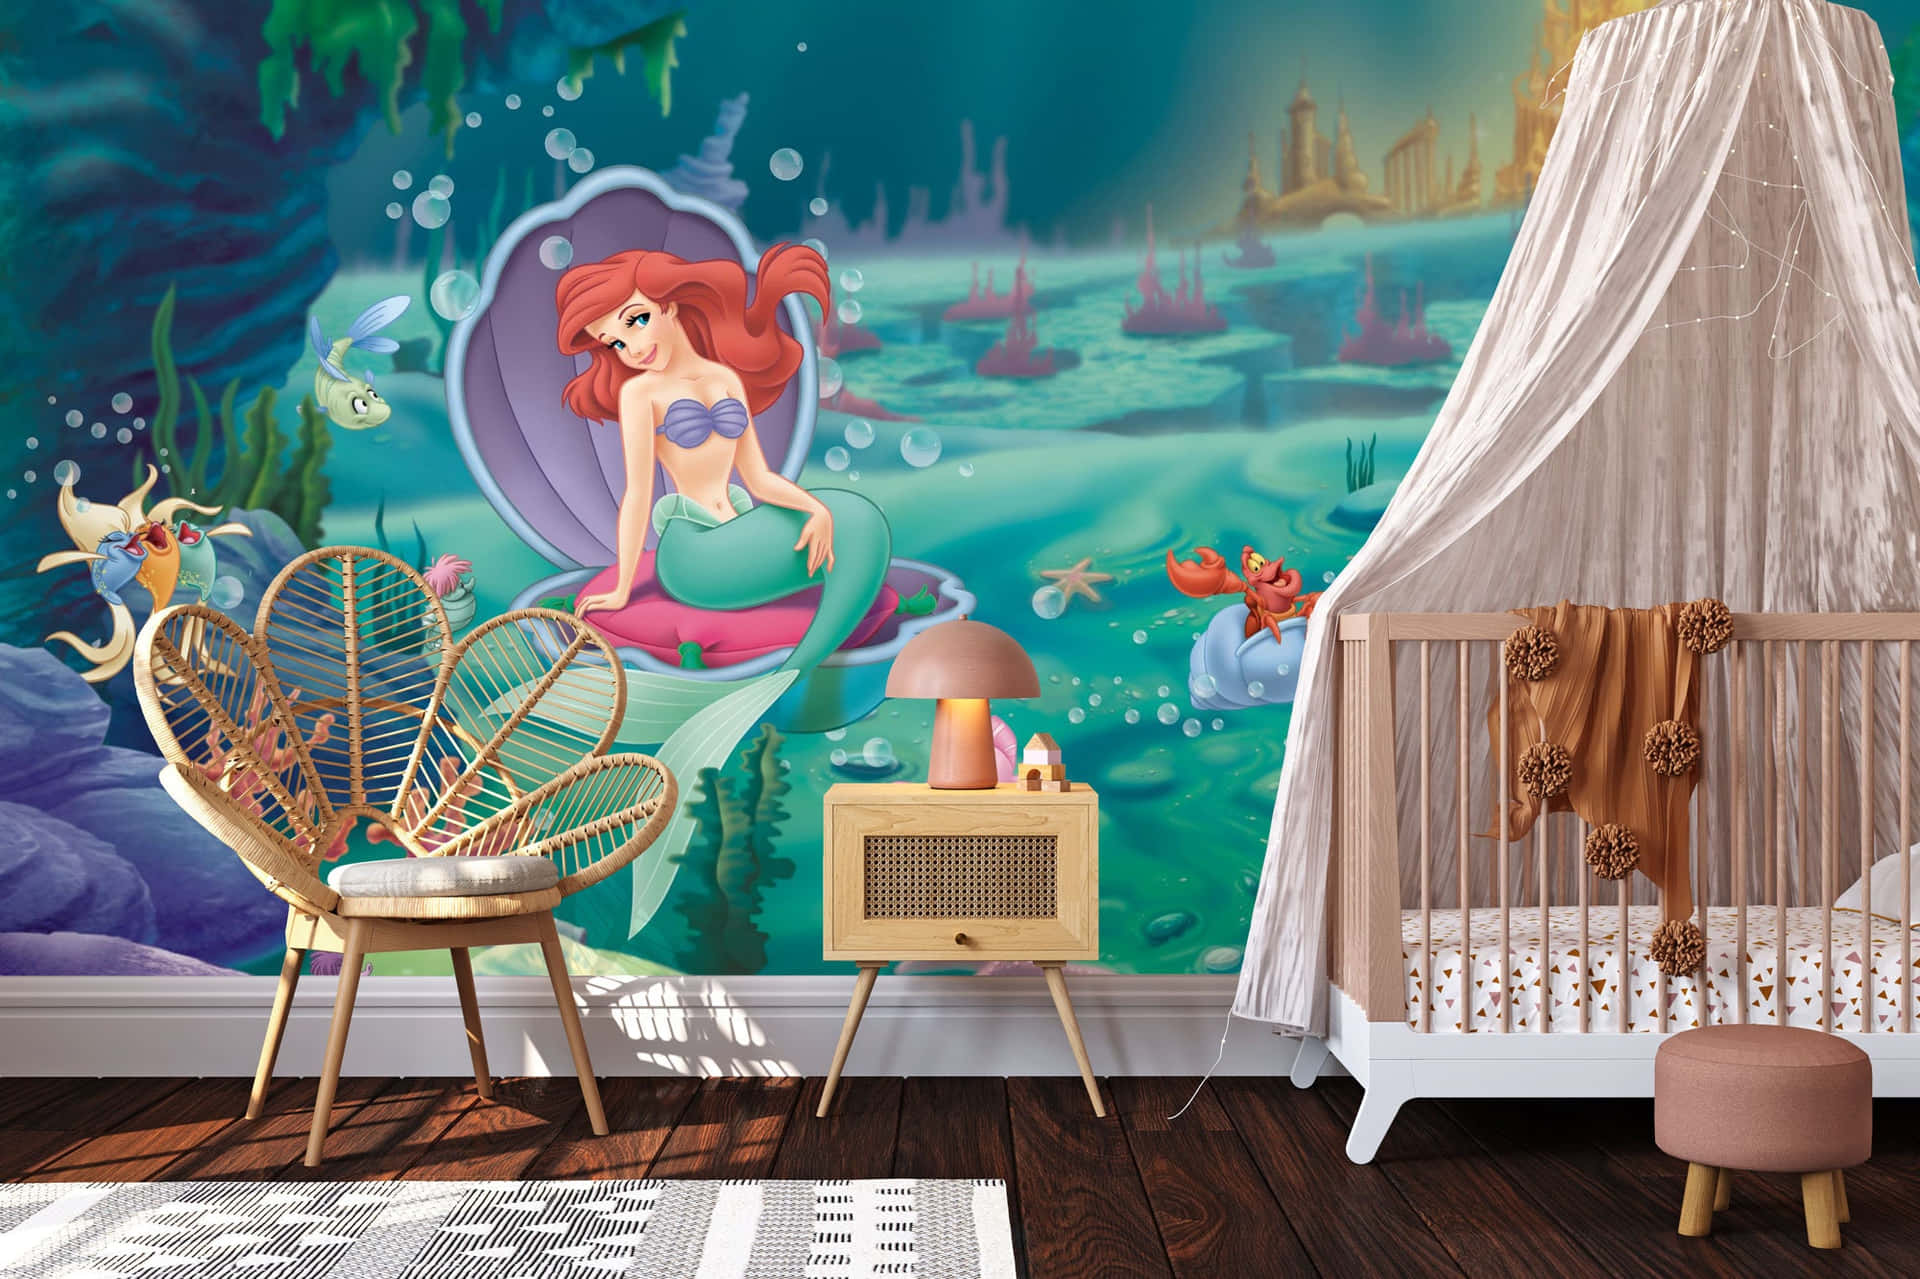 Cozy Bedroom With The Little Mermaid Design Wallpaper